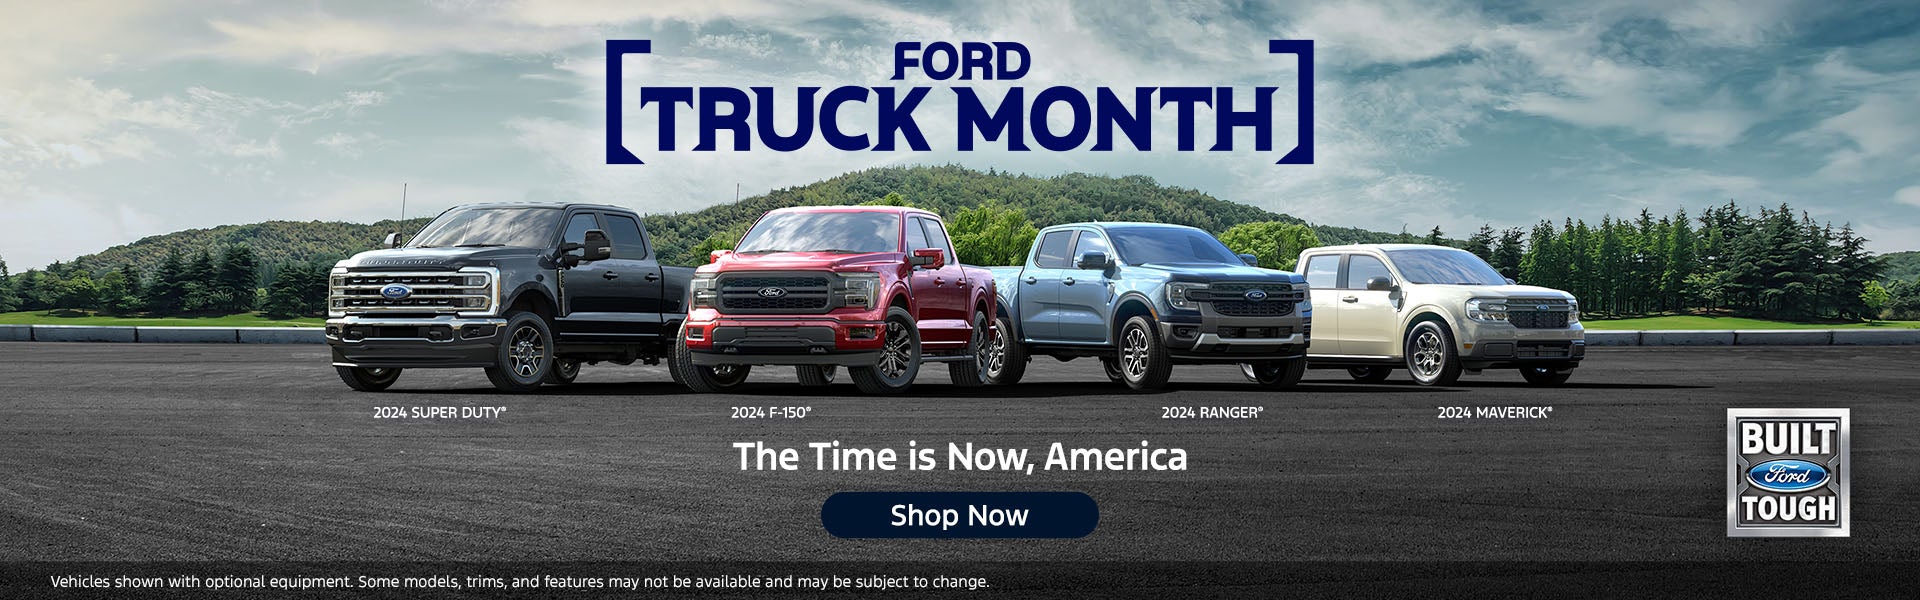 Ford Truck Month Sale Blacksburg Roanoke Virginia